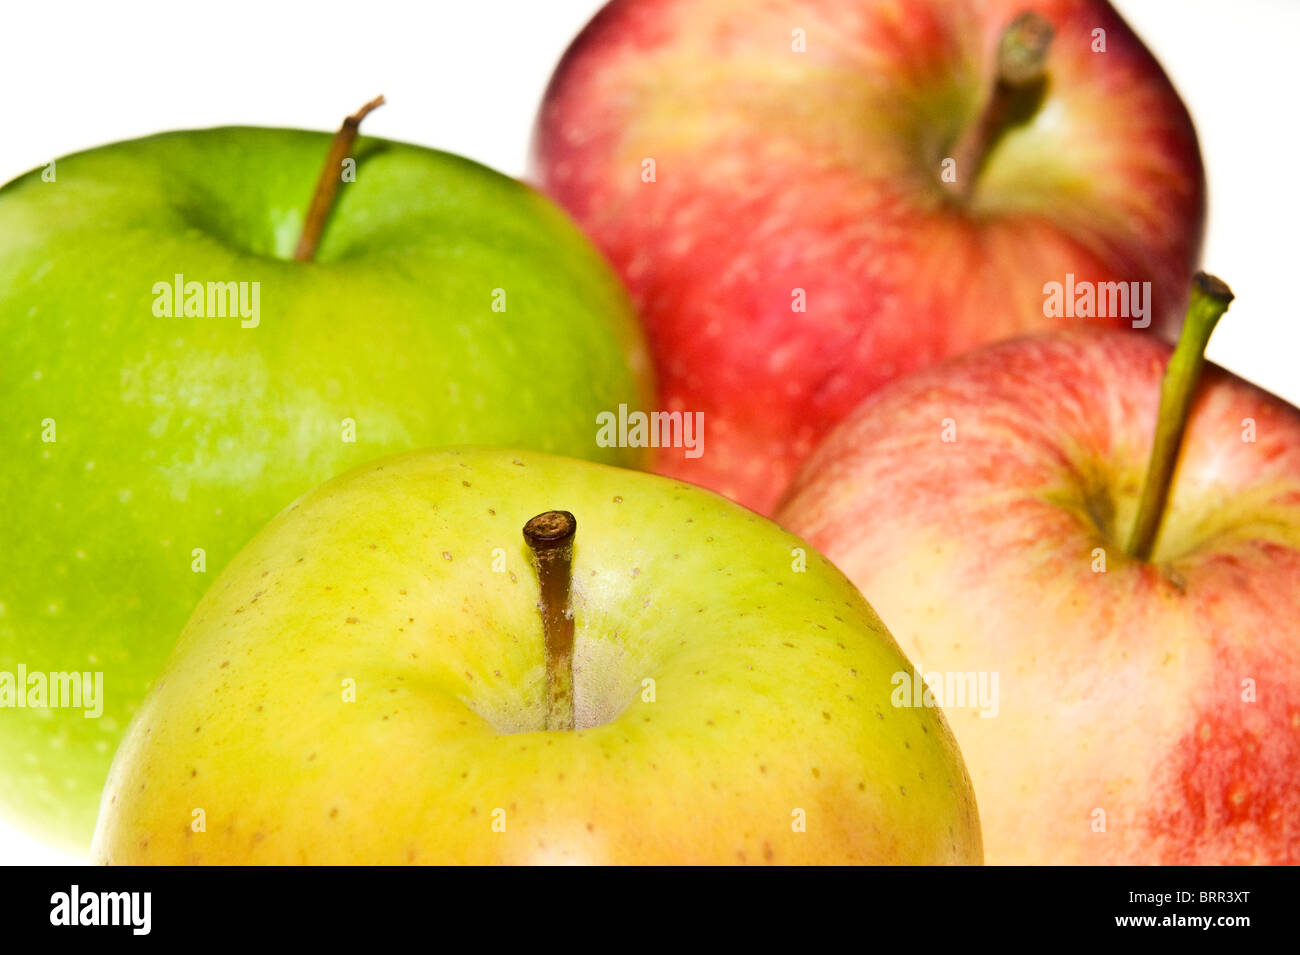 Studio shot of four different varieties of apples Stock Photo